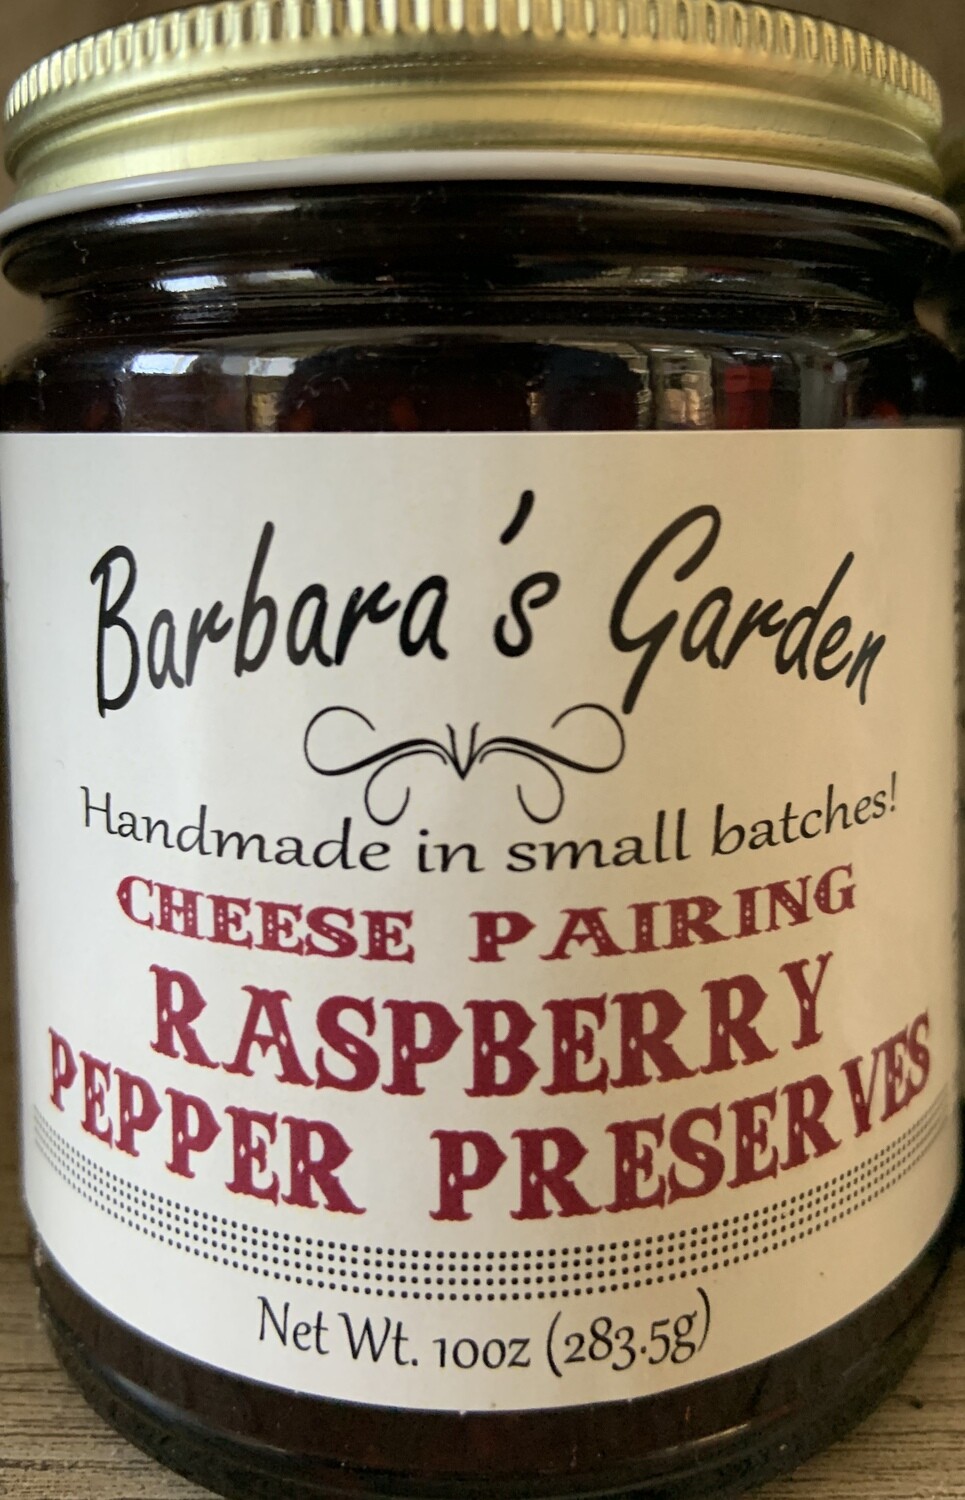 Barbara's Garden "Cheese Pairing" Raspberry Pepper Preserves 10 oz